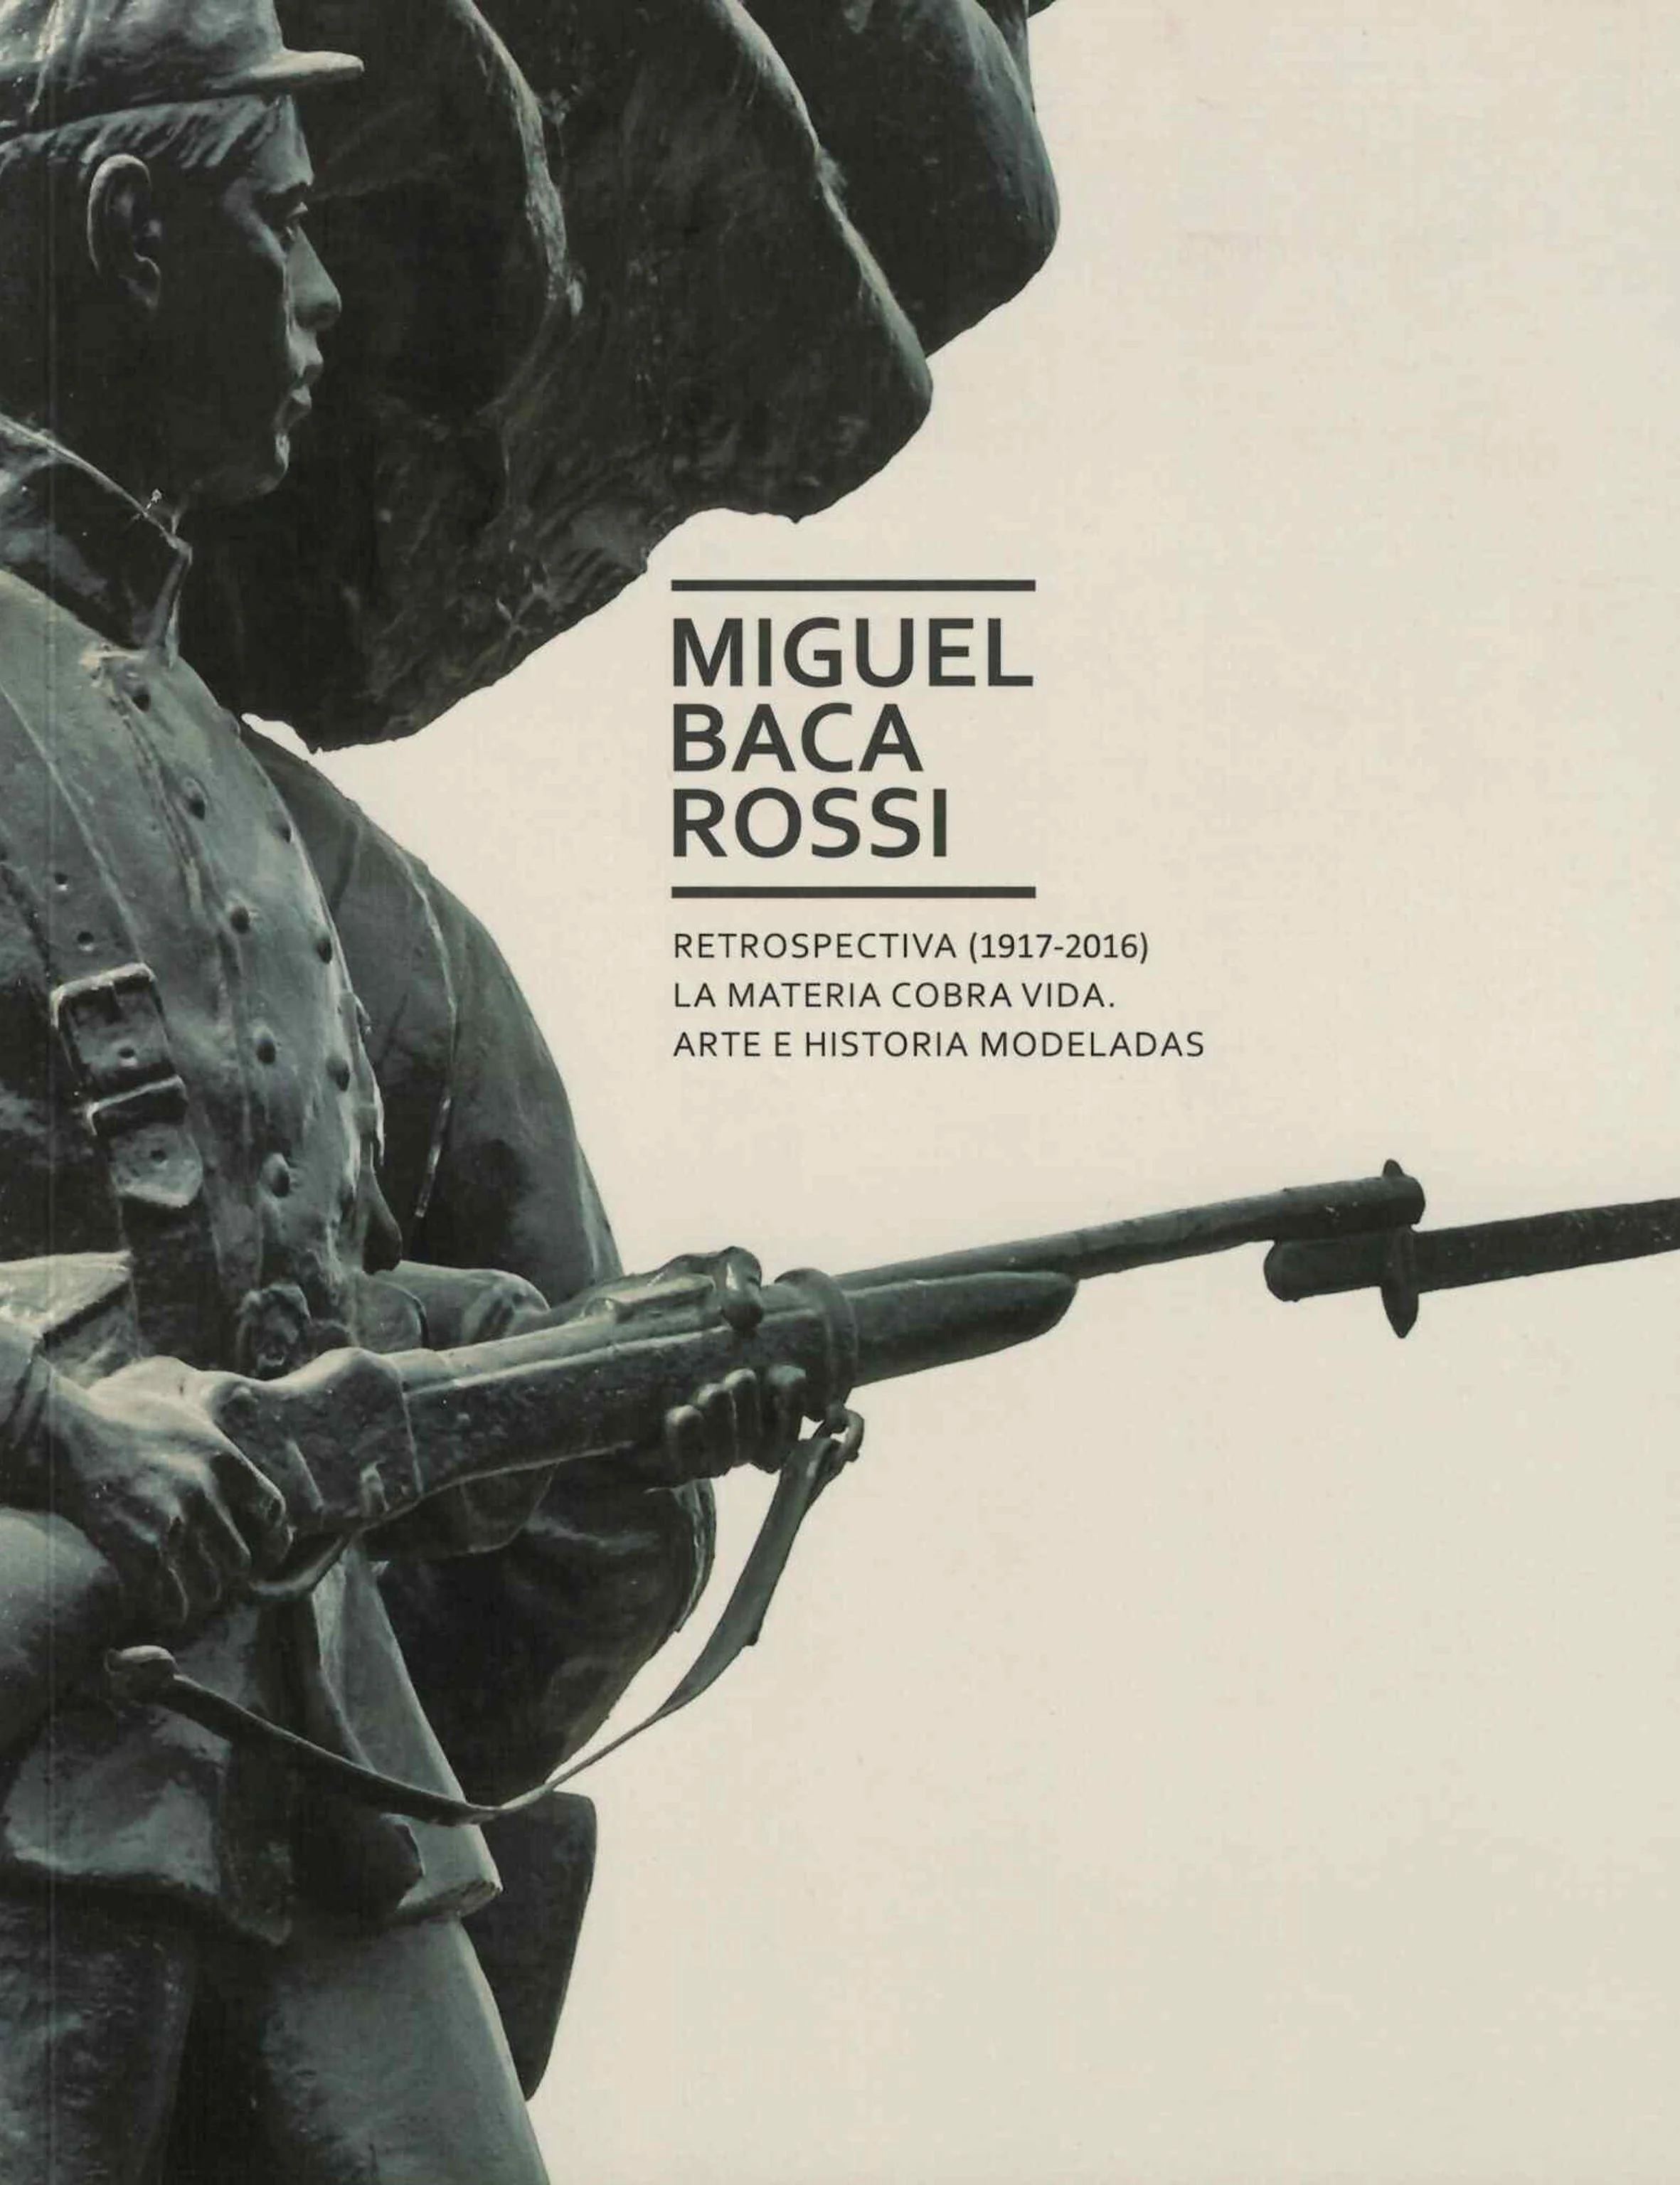 Biblioteca Nacional rendirá homenaje a artista Miguel Baca Rossi